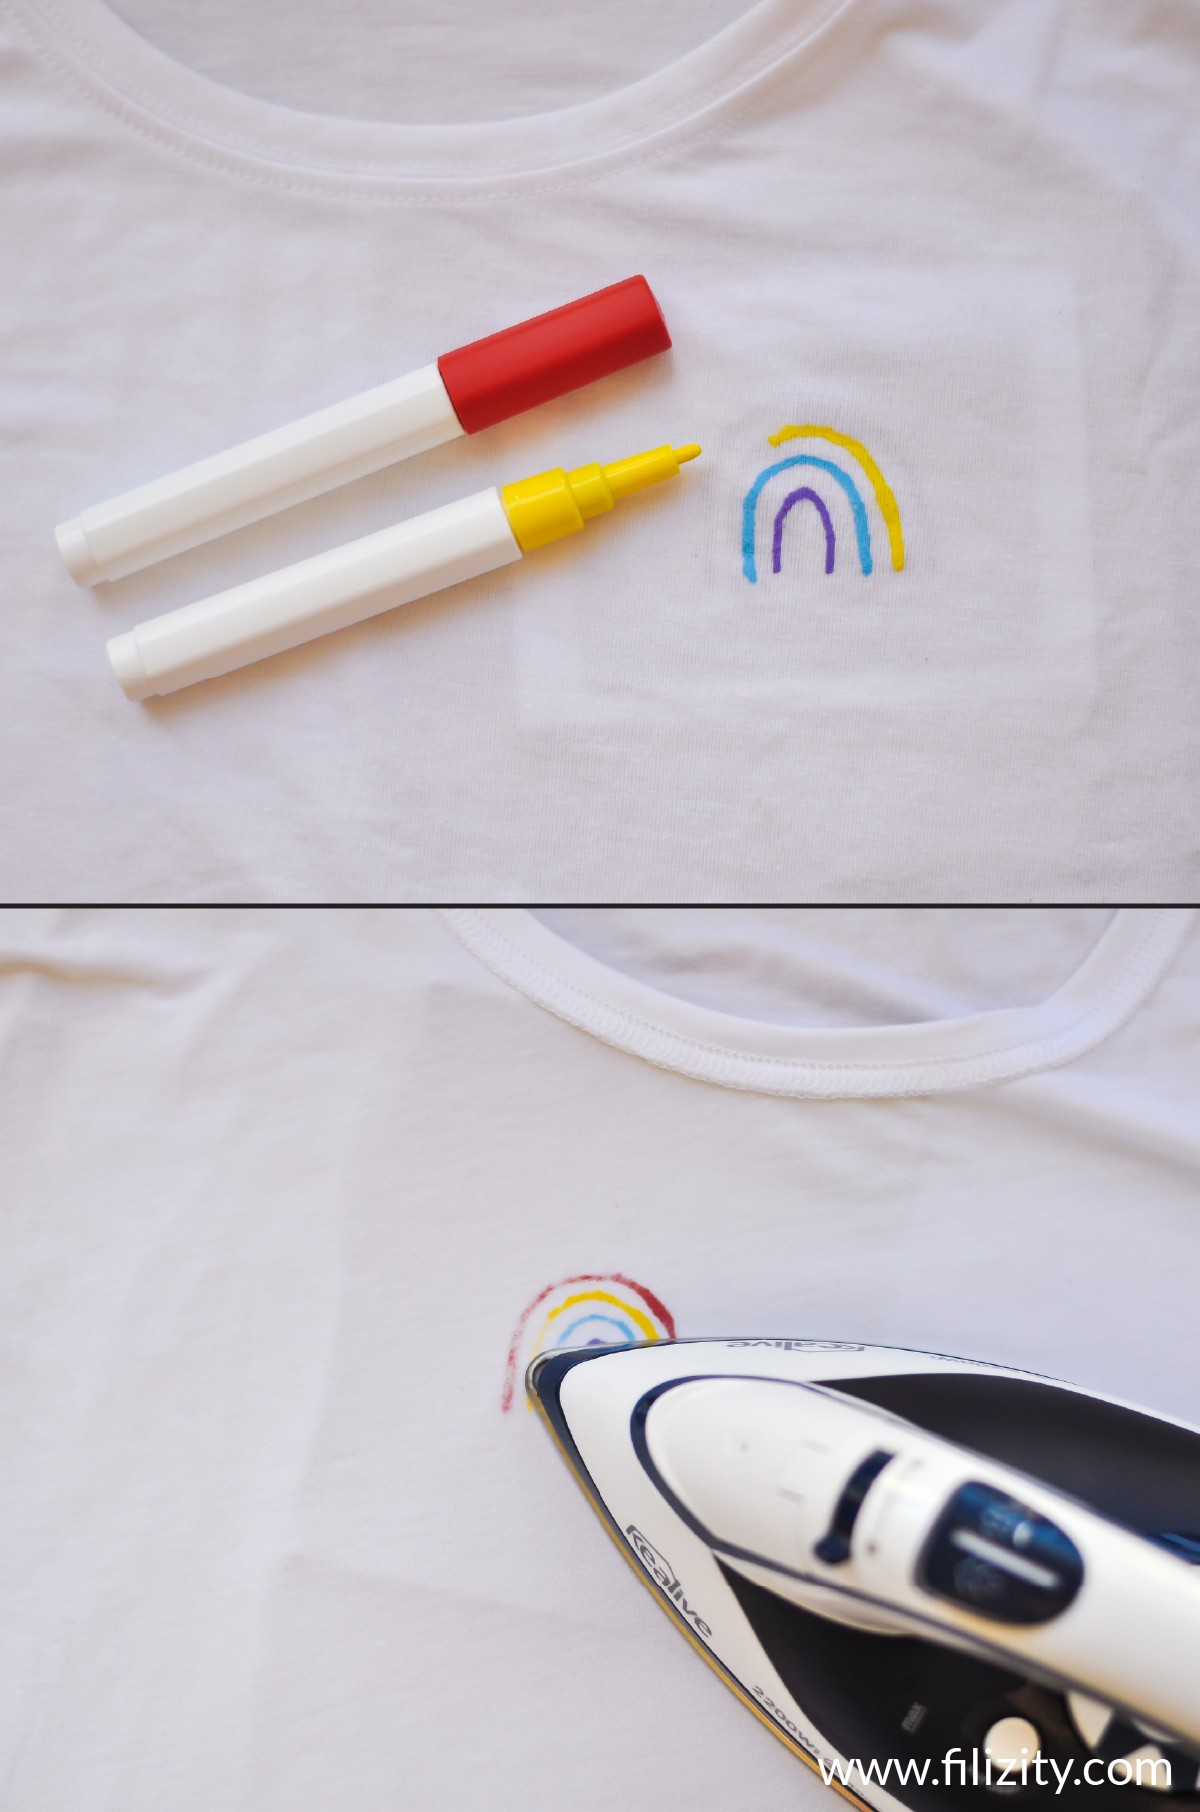 DIY Regenbogen: T-Shirt bemalen, Hoffnung schenken | Filizity.com - Kreativmagazin & DIY Blog #corona #regenbogen #wirbleibenzuhause #upcycling